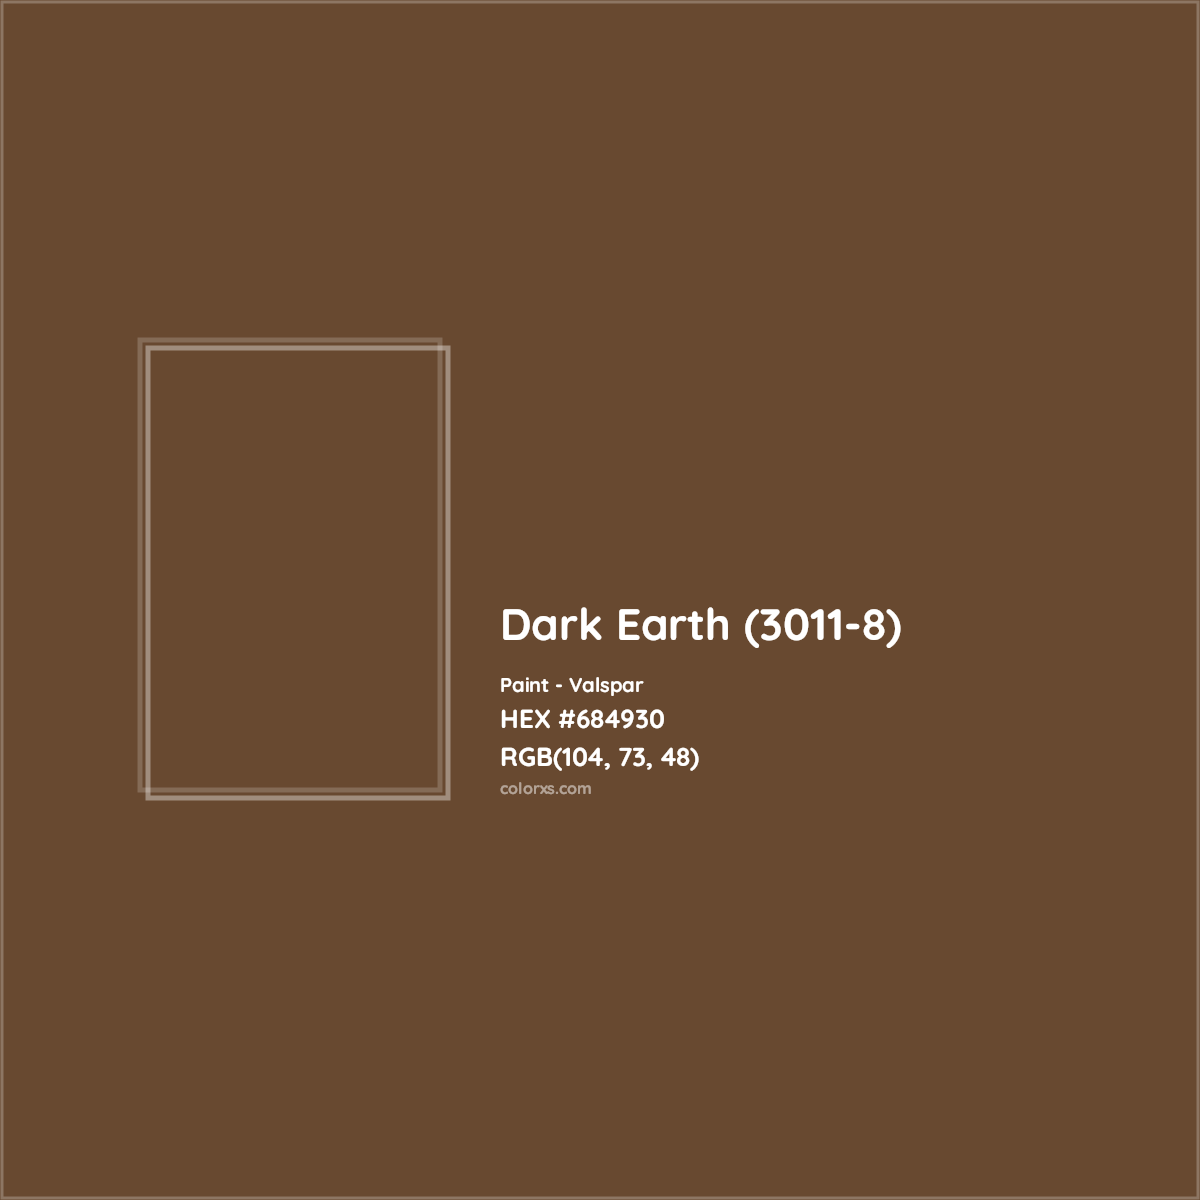 HEX #684930 Dark Earth (3011-8) Paint Valspar - Color Code